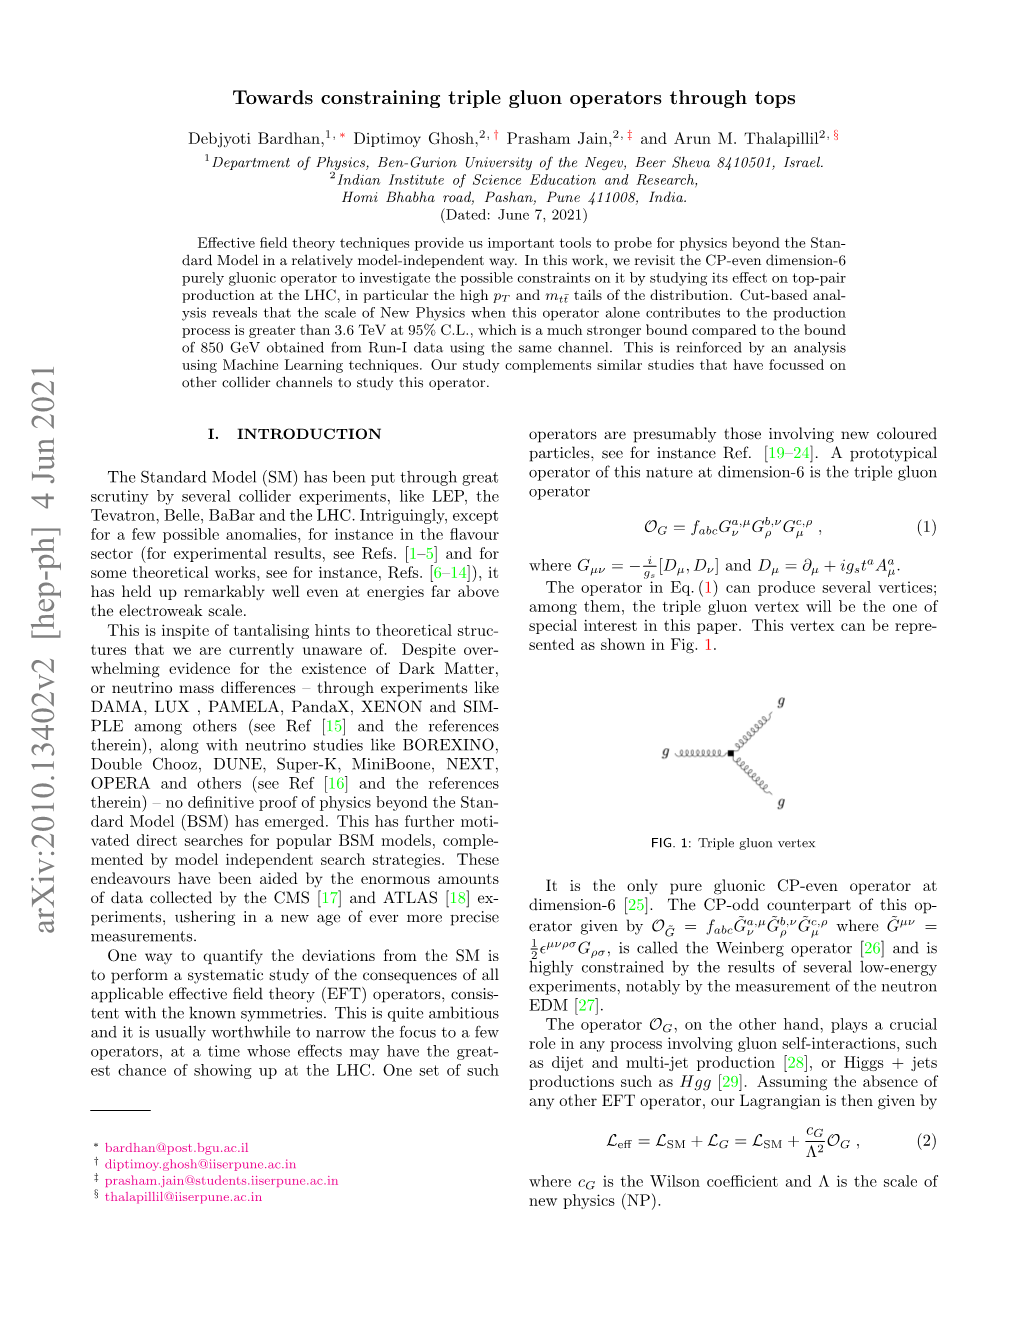 Arxiv:2010.13402V2 [Hep-Ph] 4 Jun 2021 Erator Given by O = F G G G Where G = Measurements